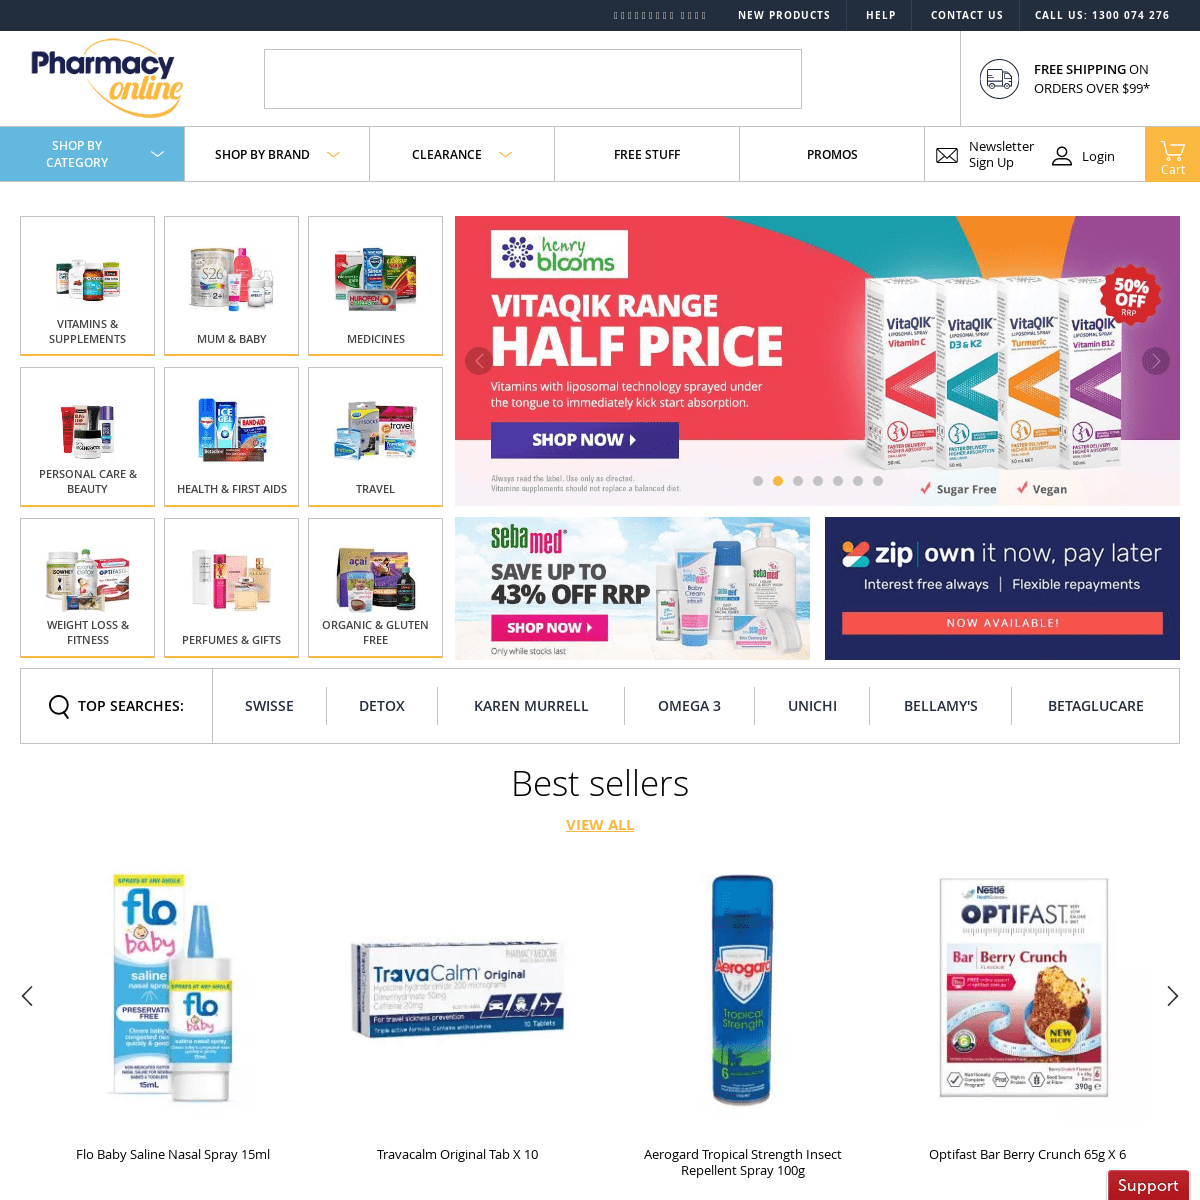 A complete backup of pharmacyonline.com.au